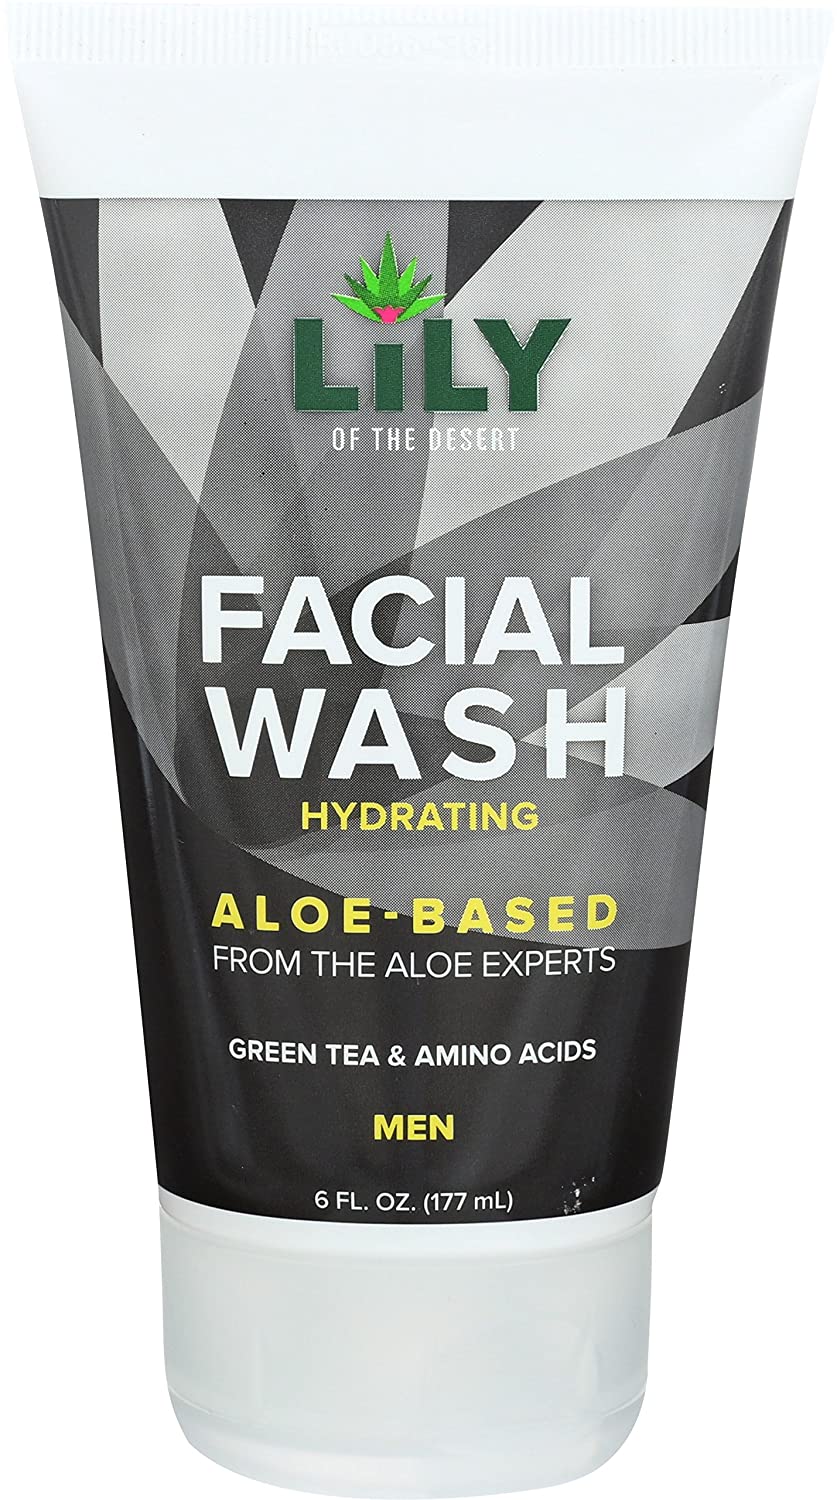 Lily of desert aloe facial wash